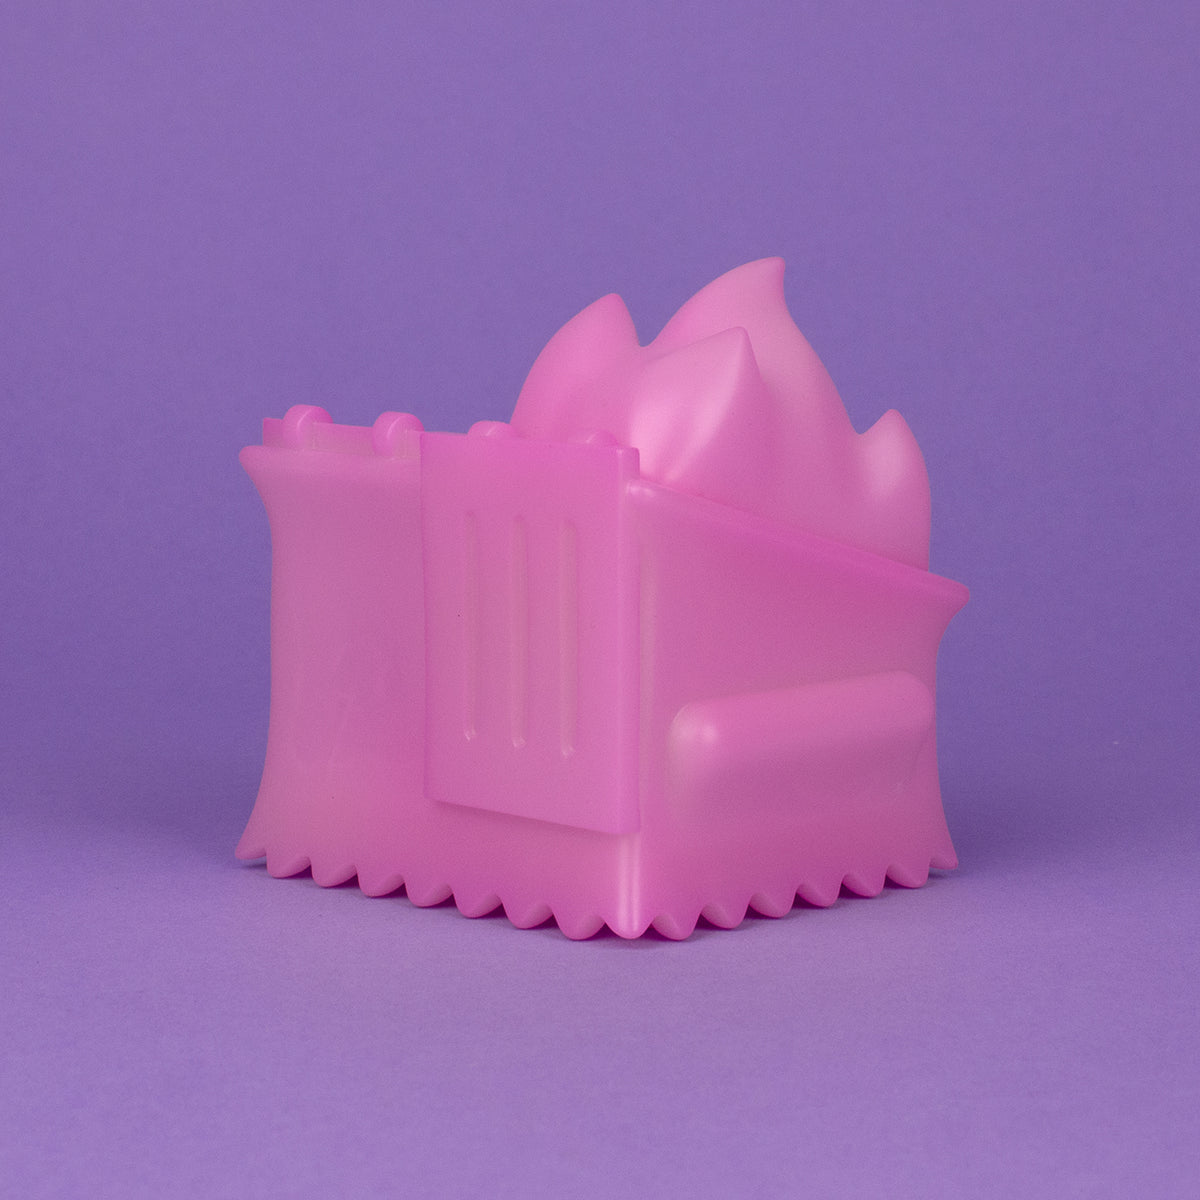 Dumpster Ghost Fire Vinyl Figure - Pink Glow in the Dark